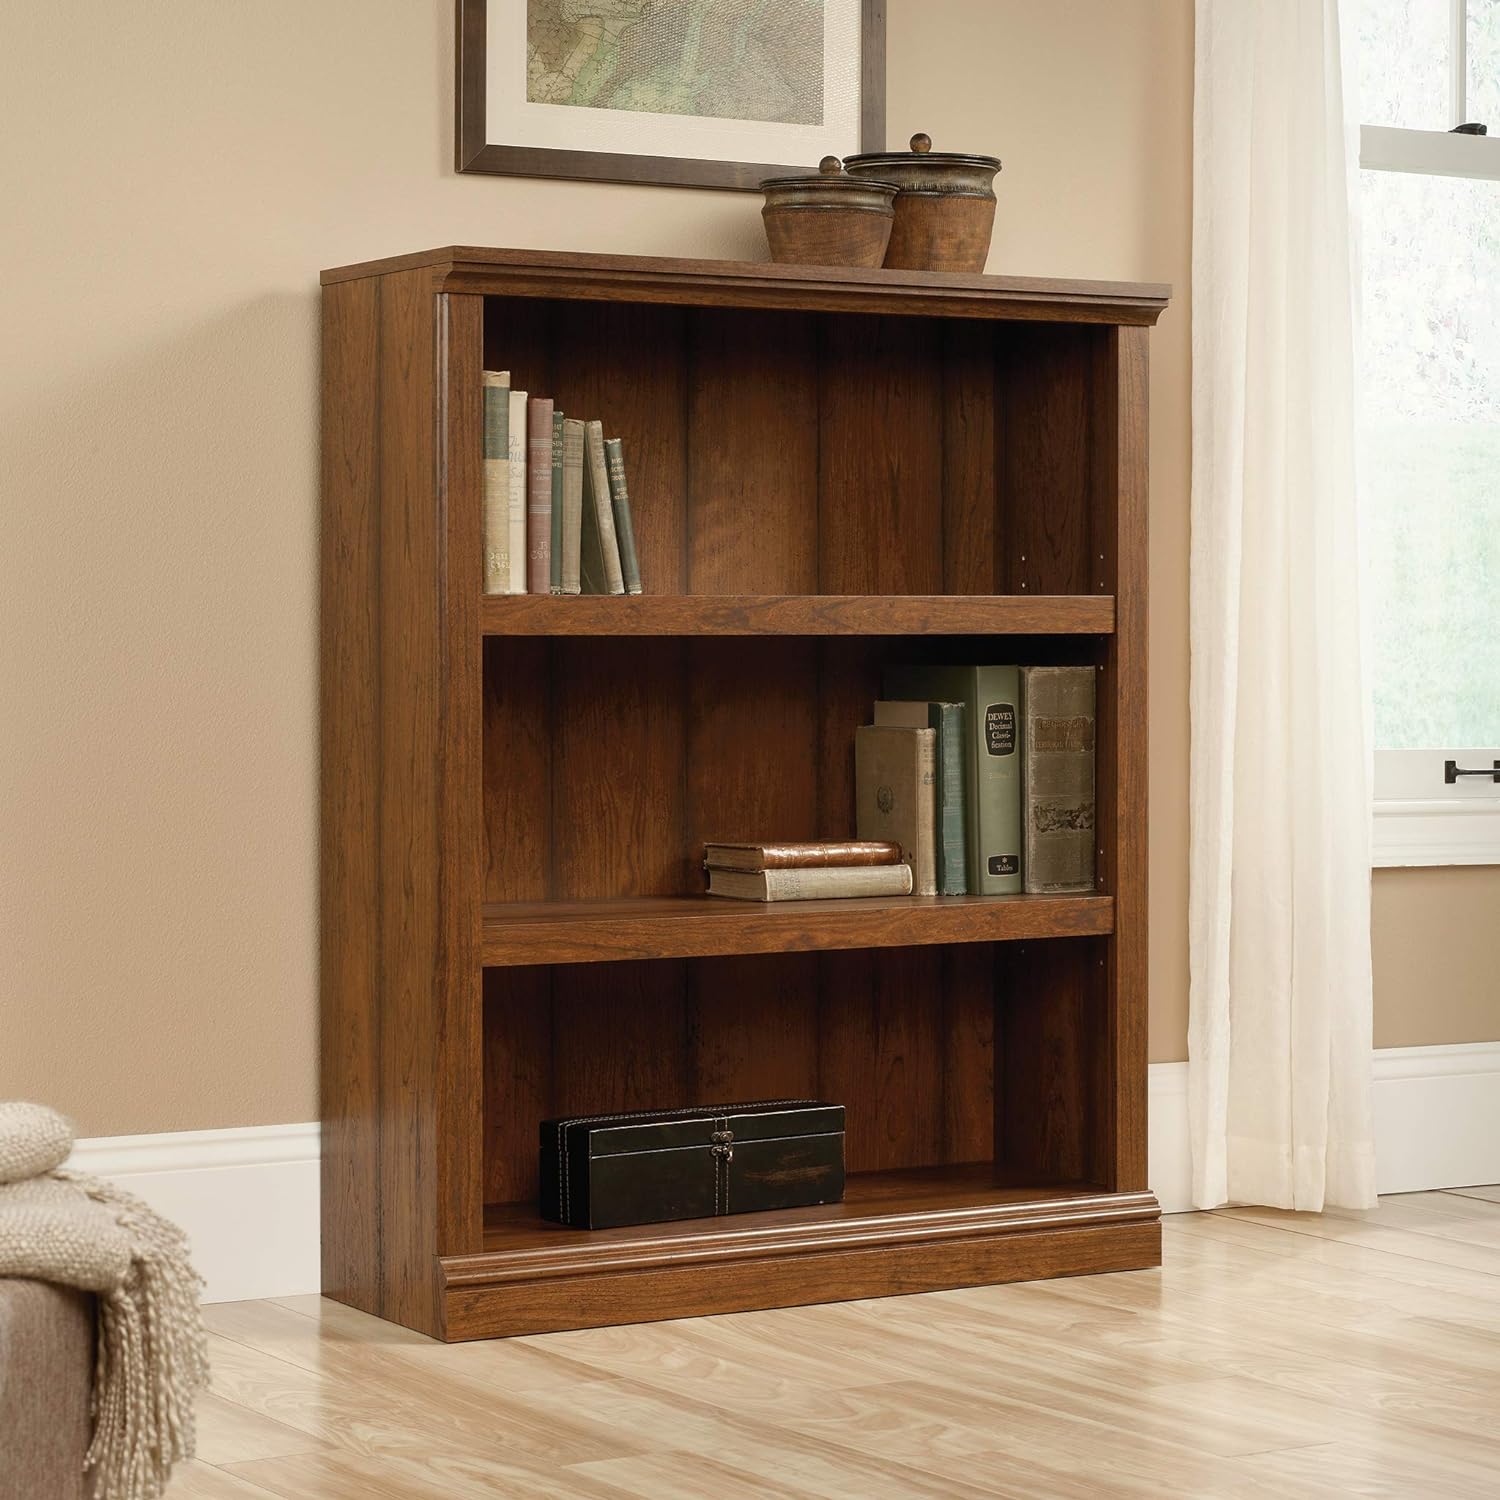 Sauder Select Collection 3-Shelf Bookcase, Washington Cherry finish